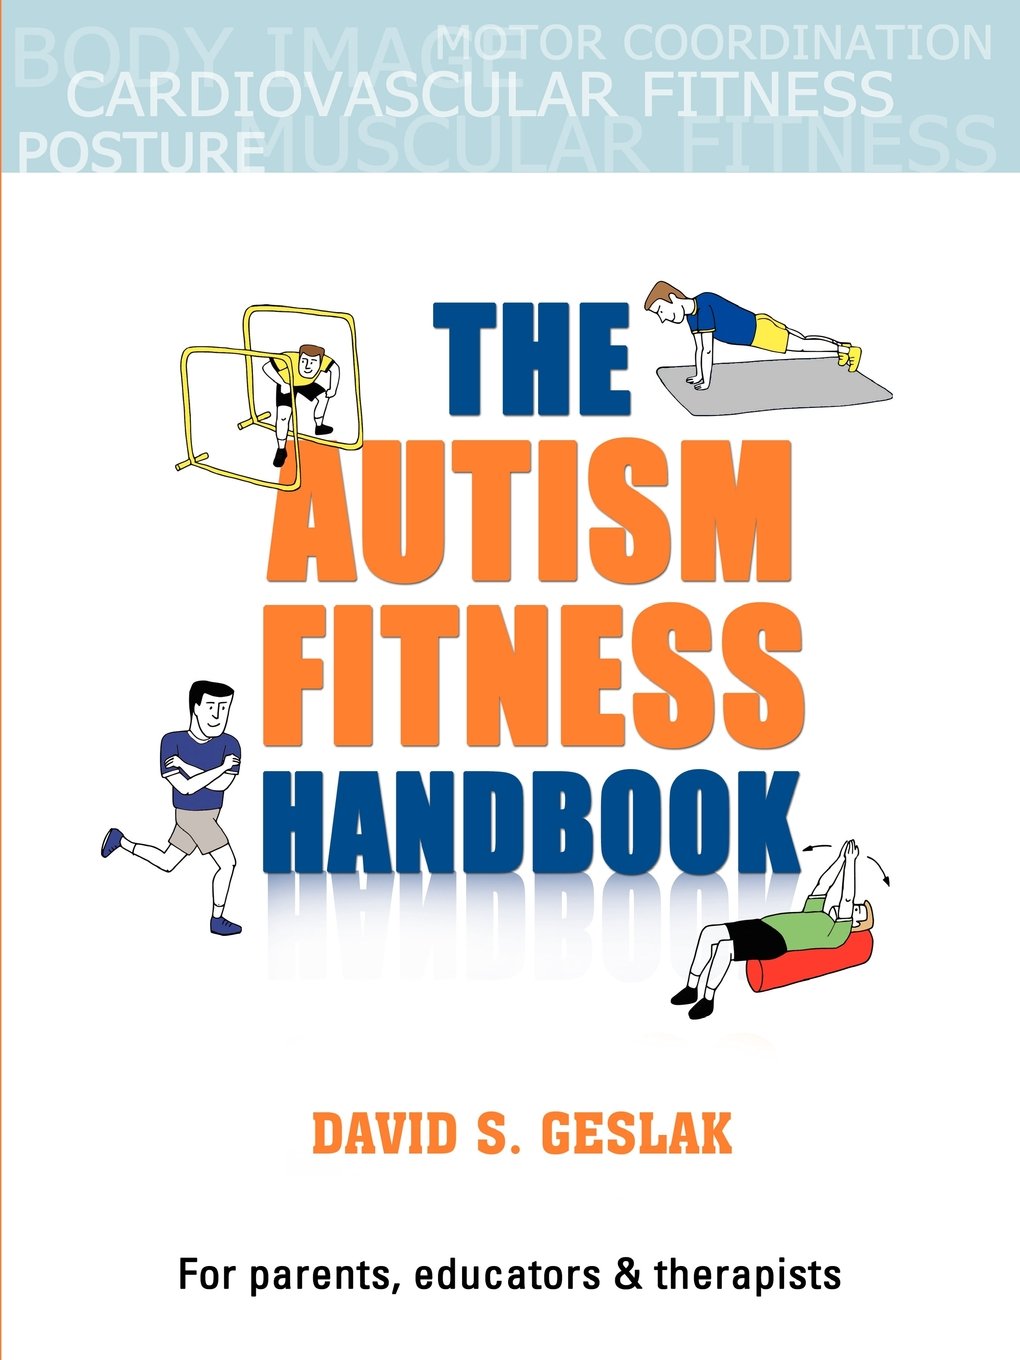 the autism fitness handbook